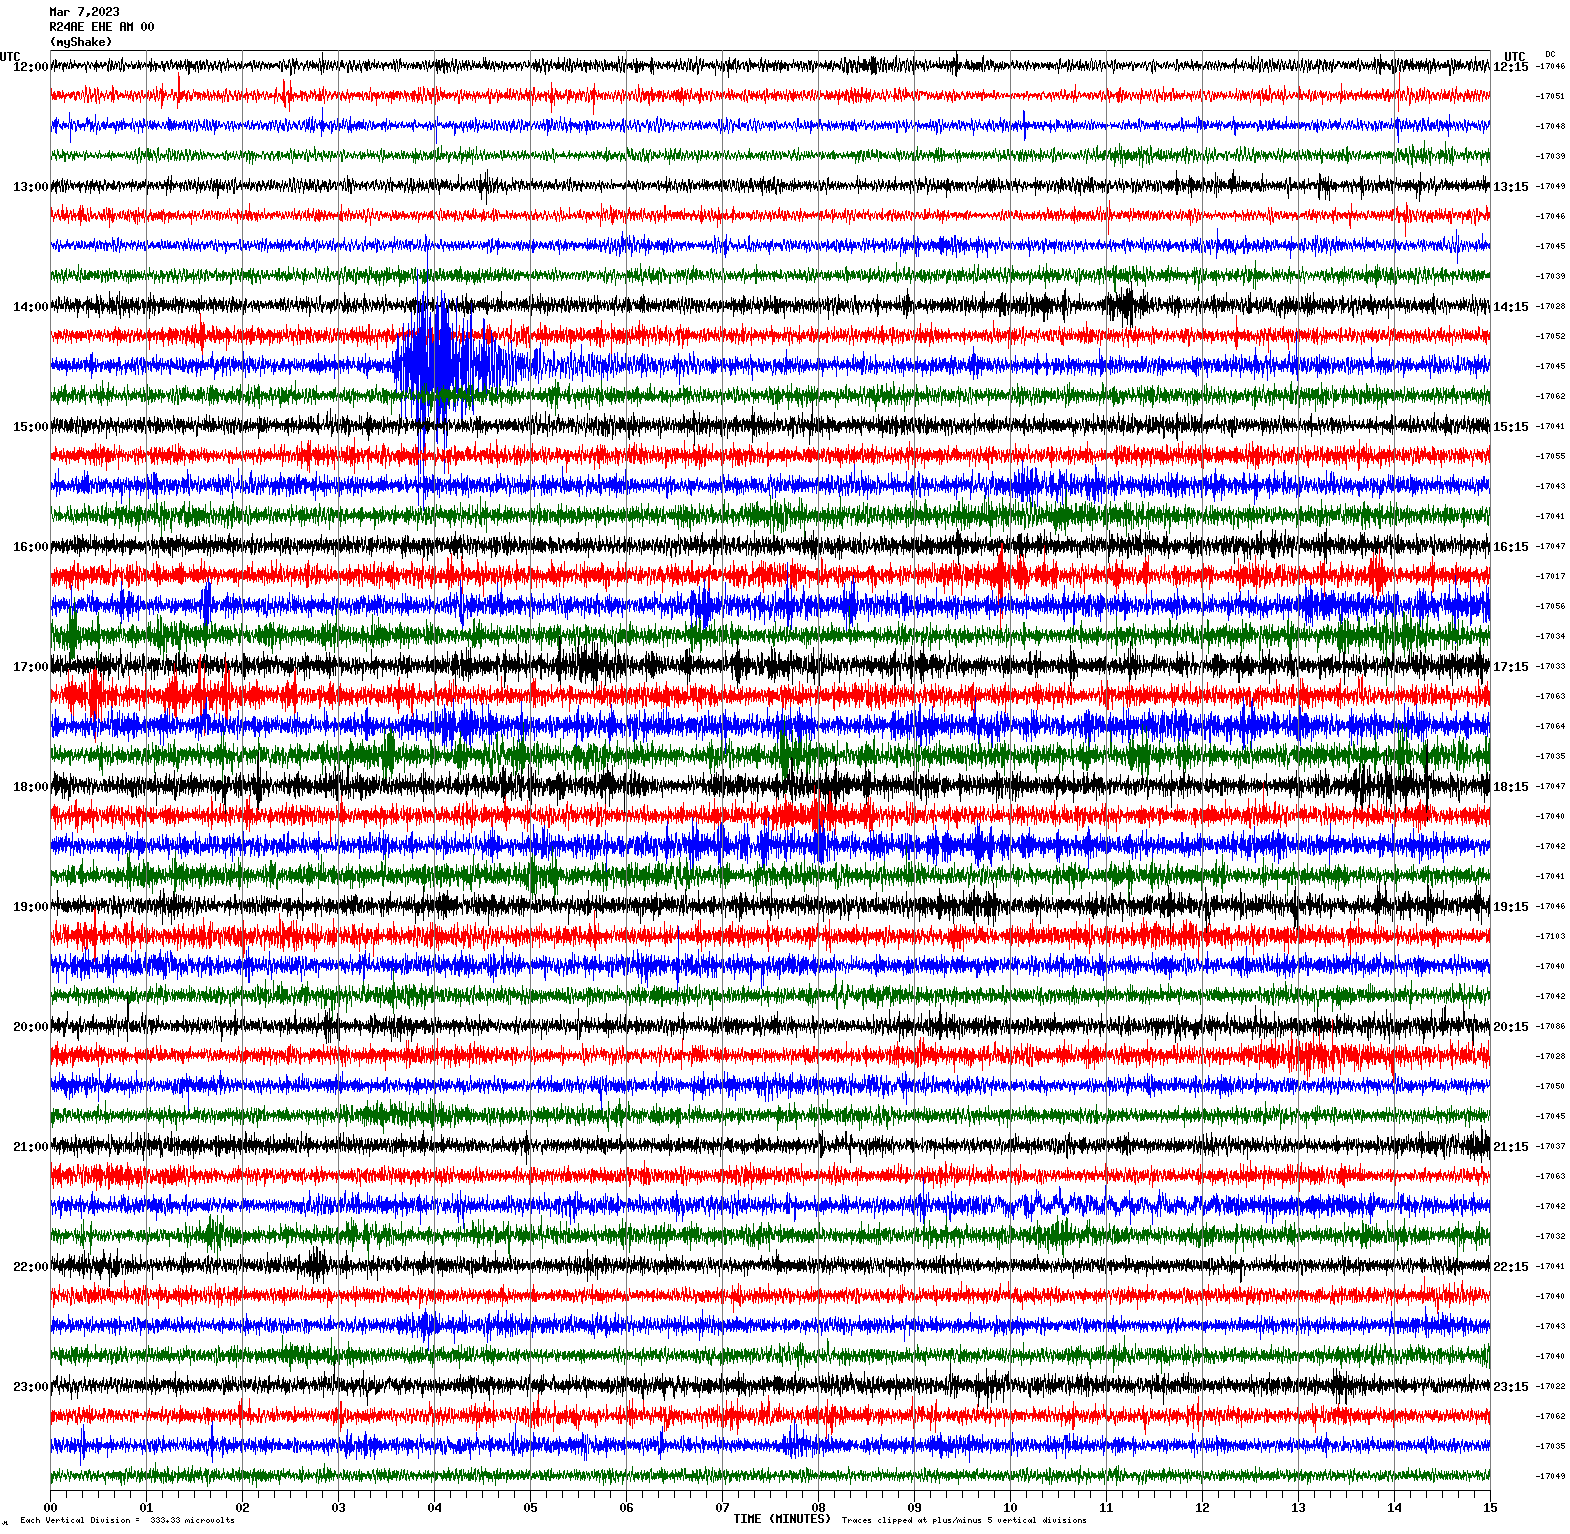 /seismic-data/R24AE/R24AE_EHE_AM_00.2023030712.gif